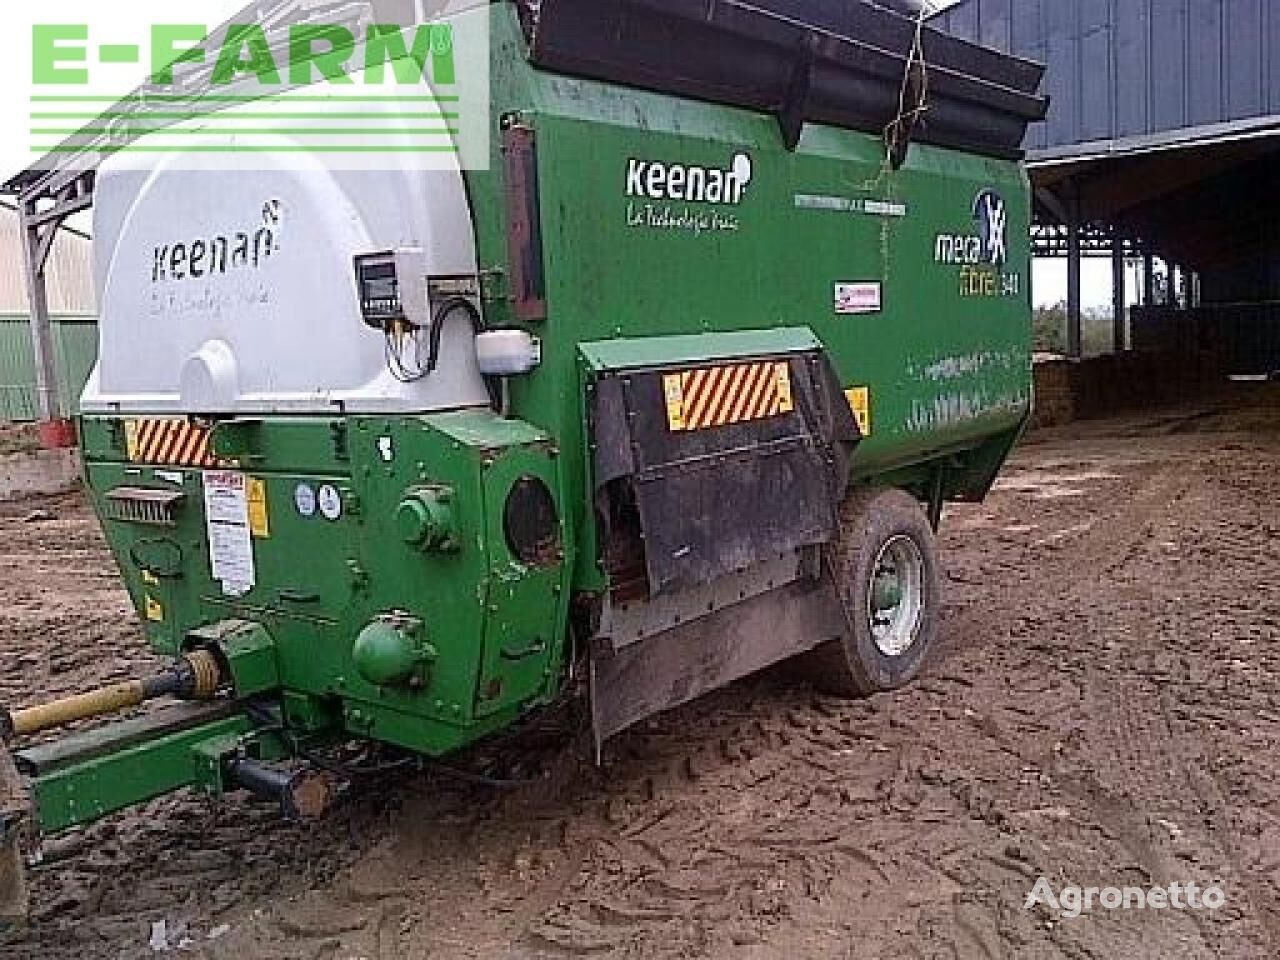 Keenan feed mixer